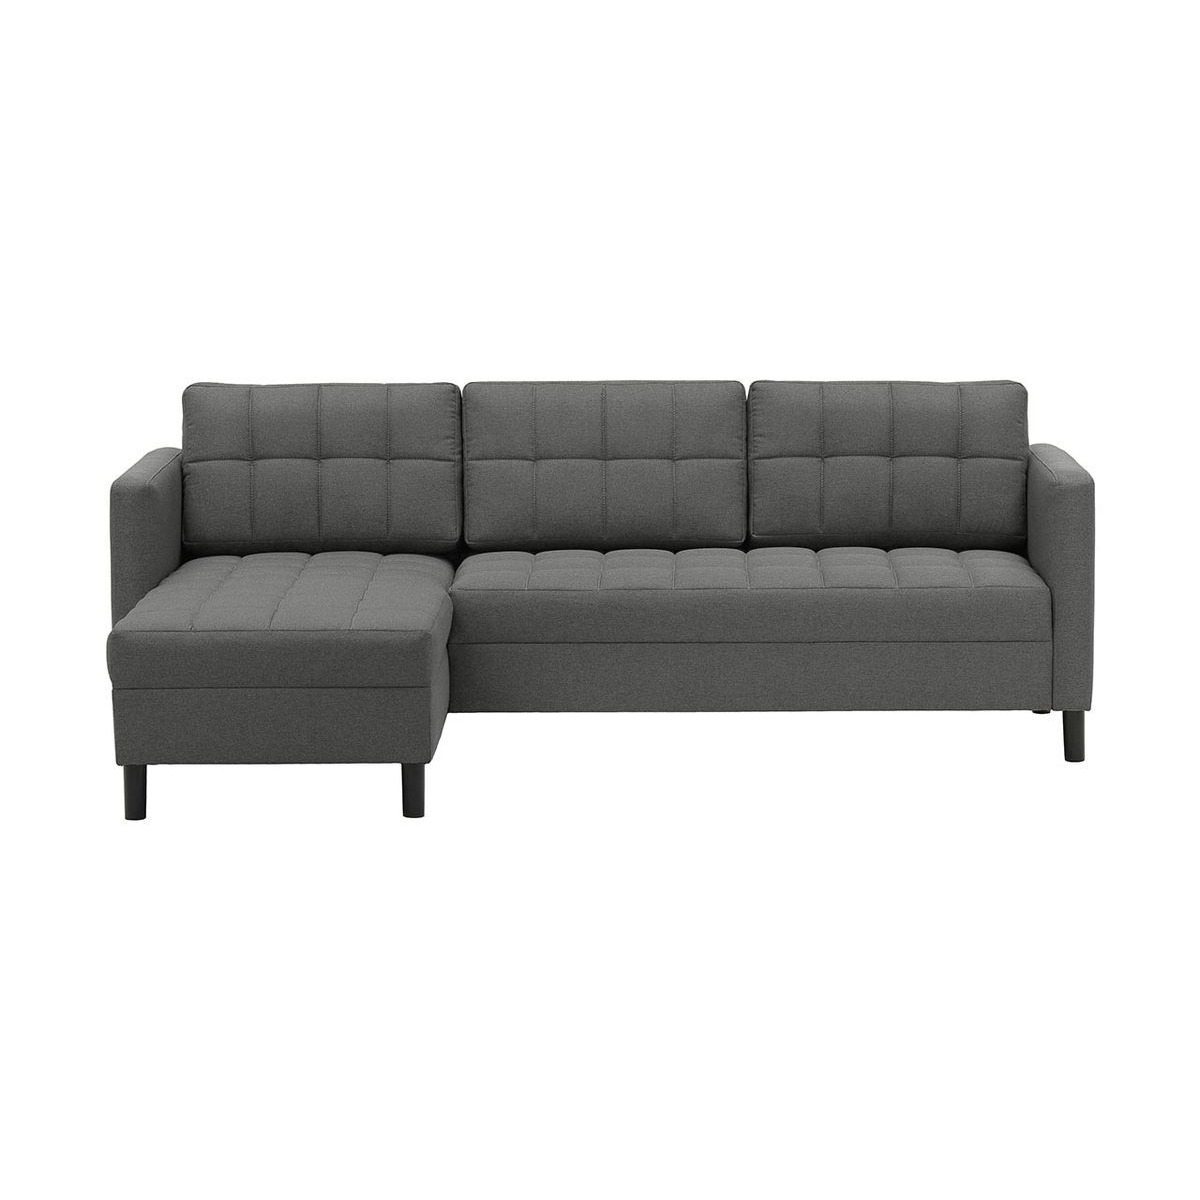 Ludo Universal Corner Sofa Bed, dark grey - image 1